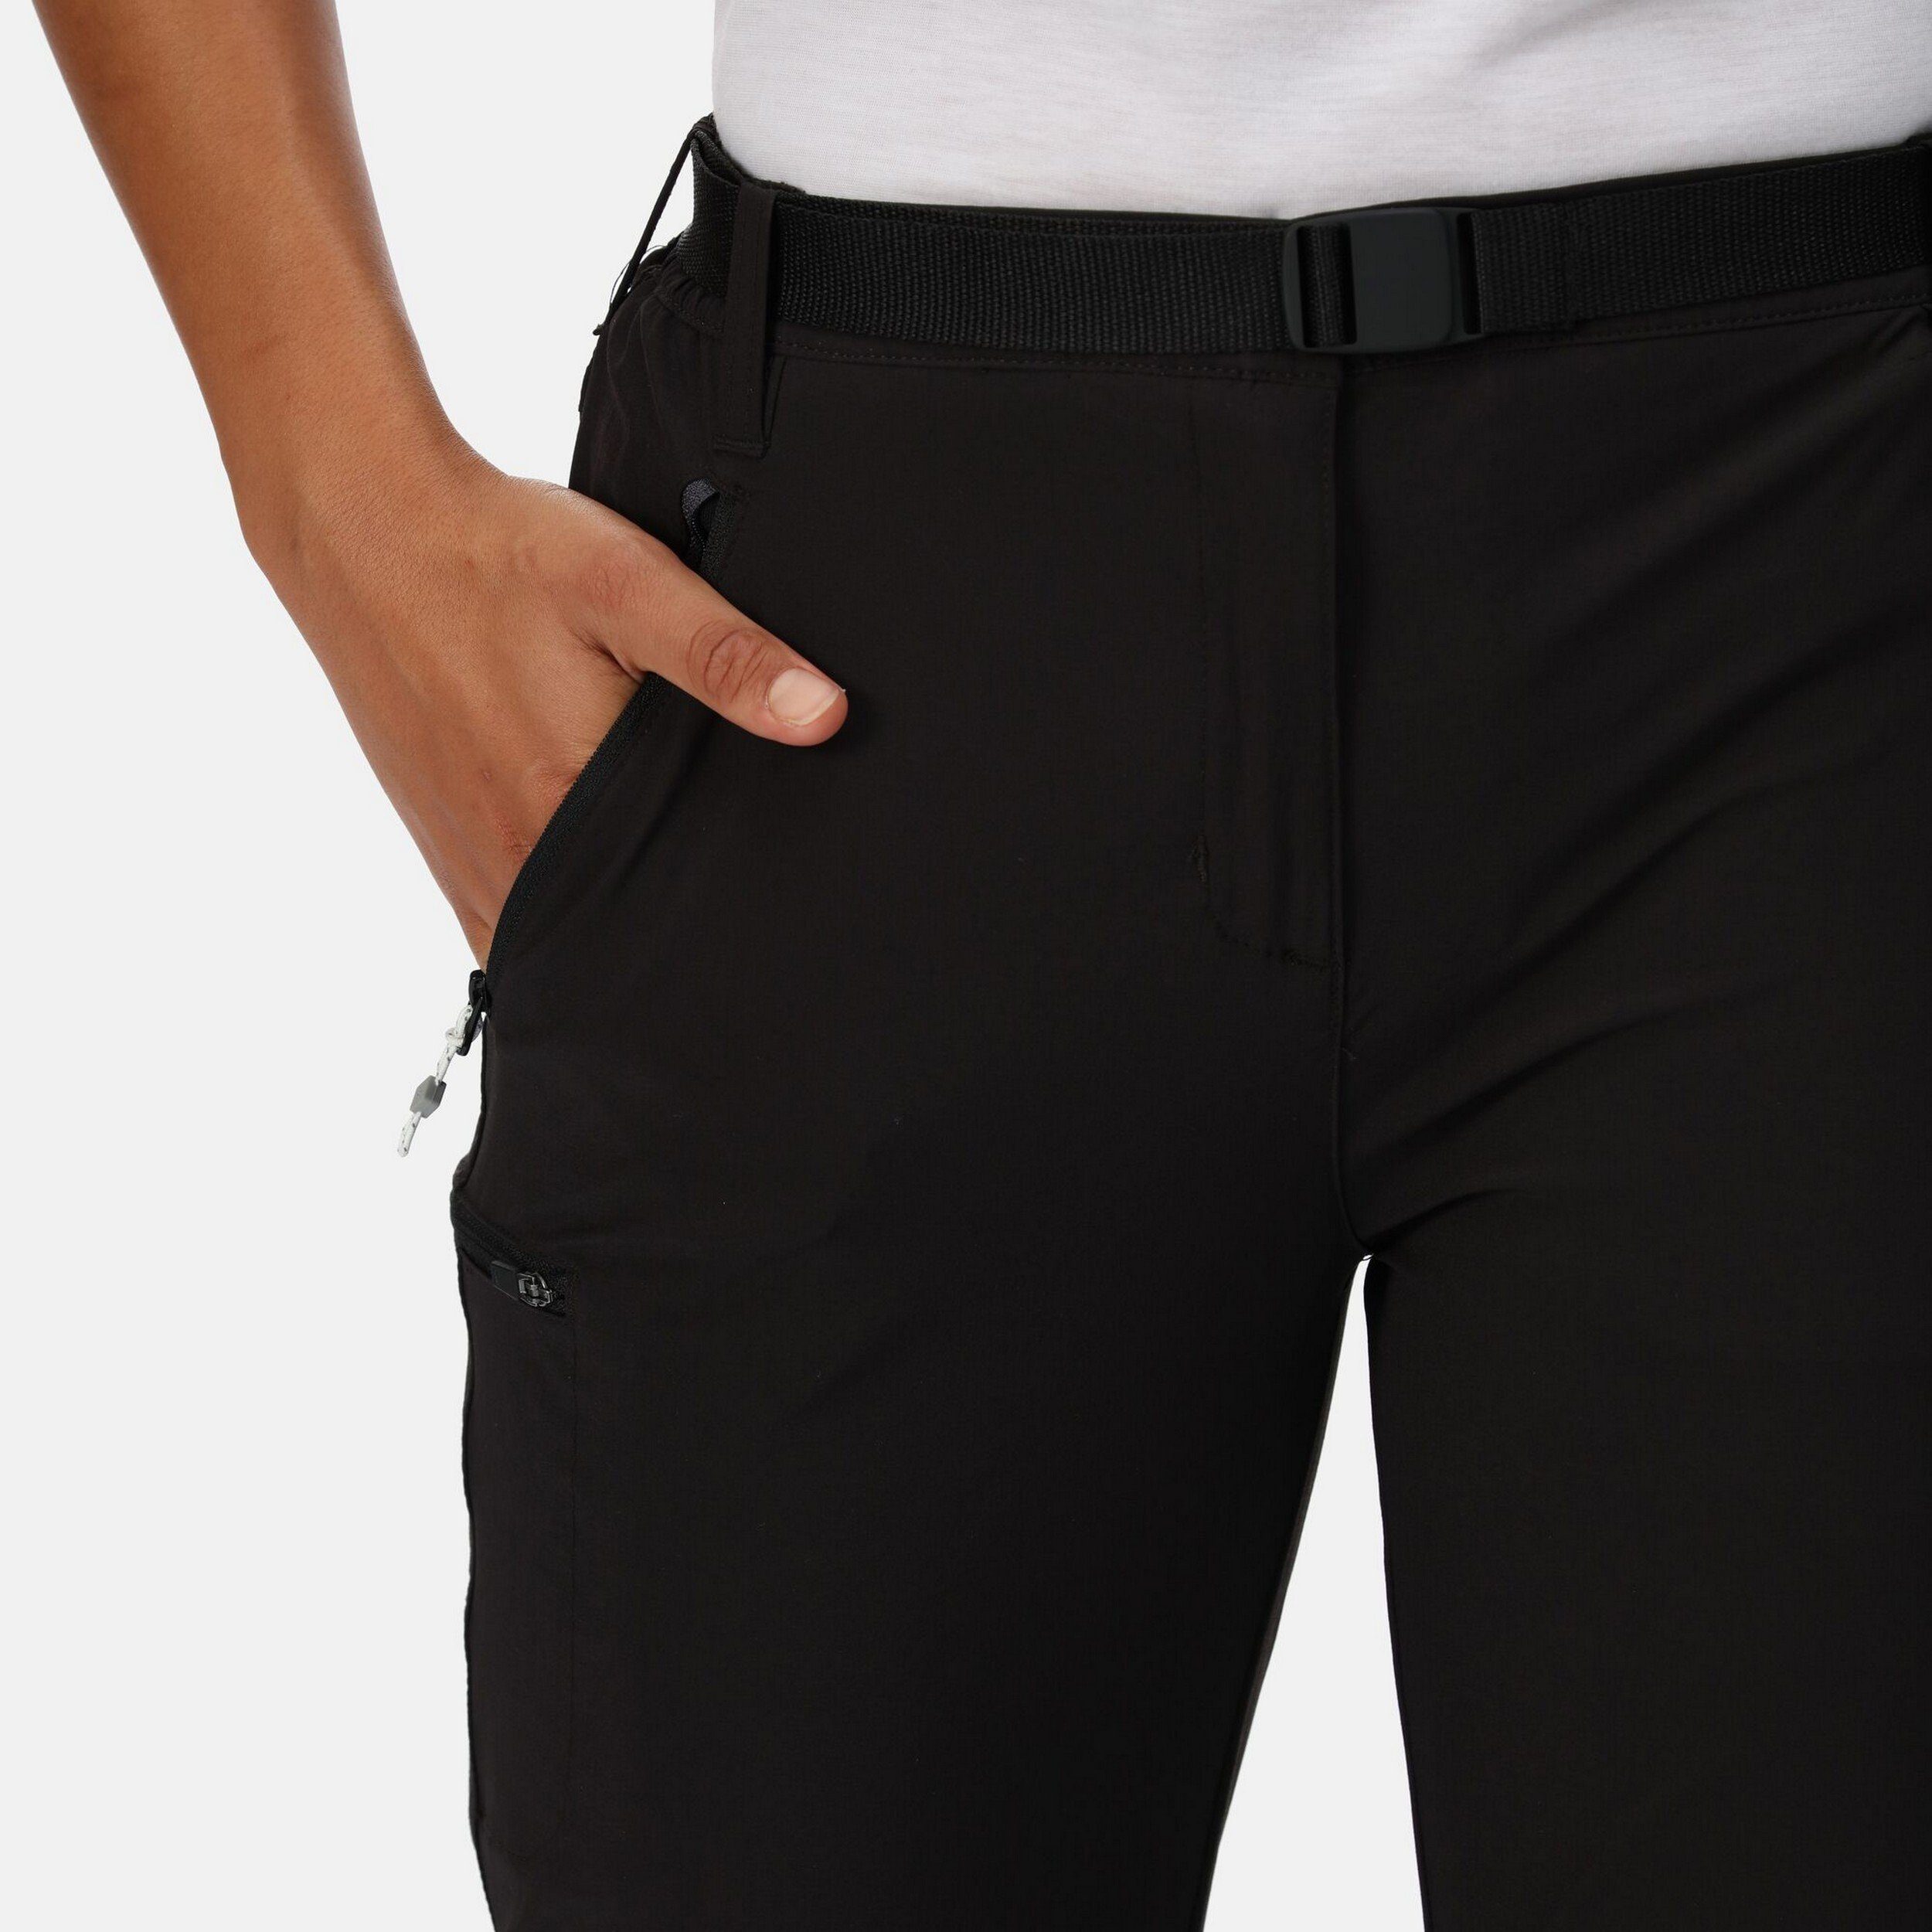 abnehmbaren Regatta Black Zip Hosenbeinen Xert mit für Outdoorhose Off Damen,